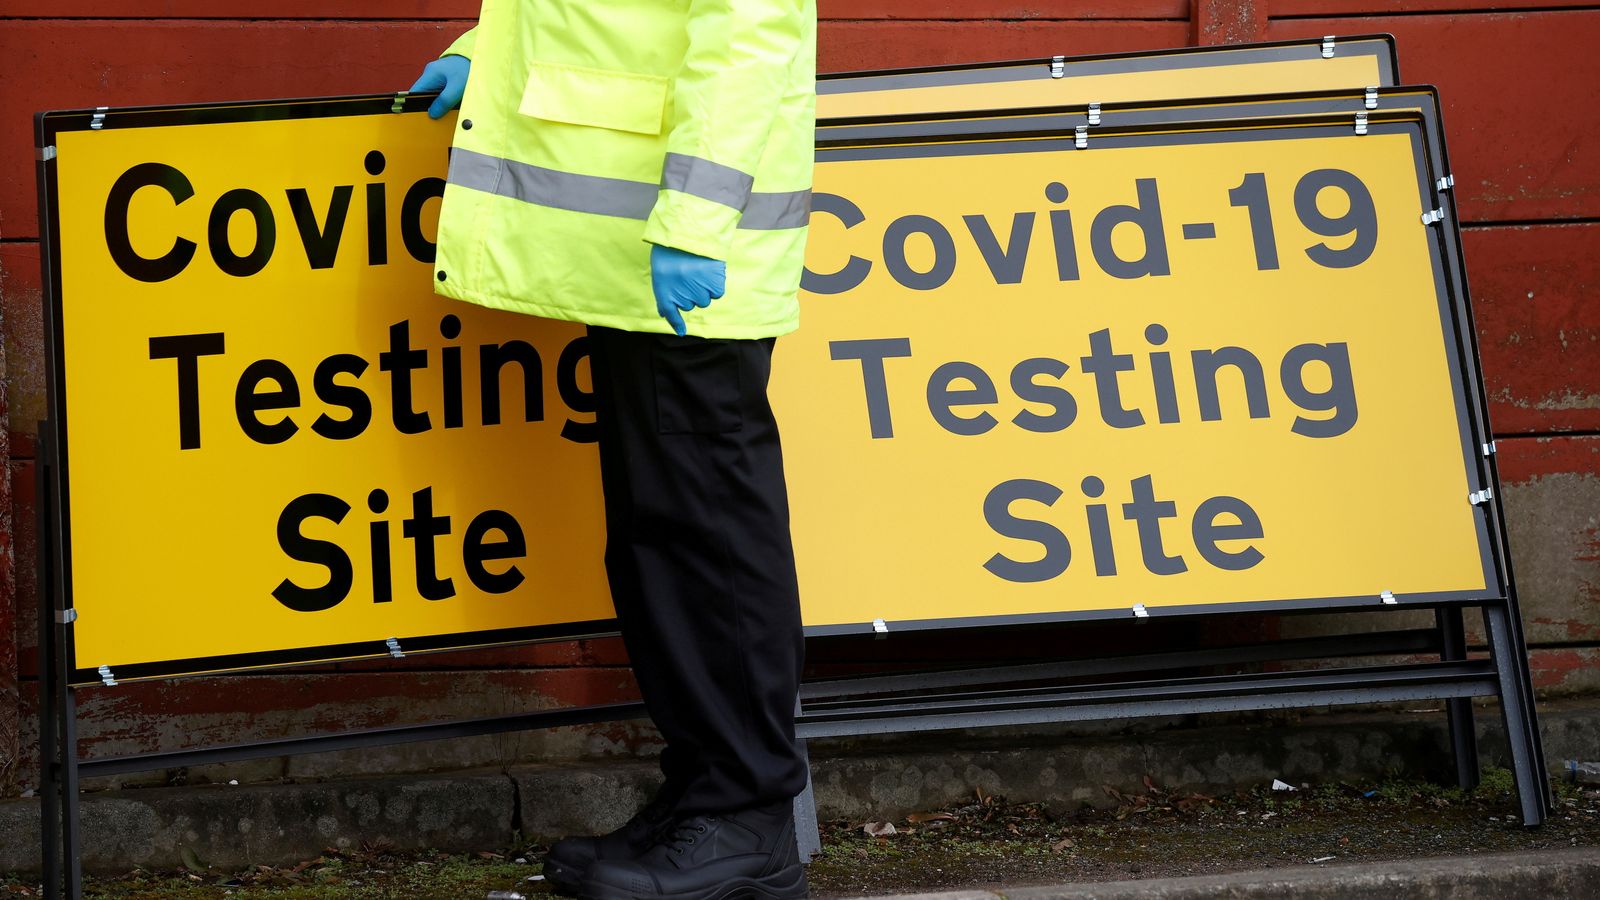 COVID-19: UK records 26,068 new coronavirus cases - highest since late January